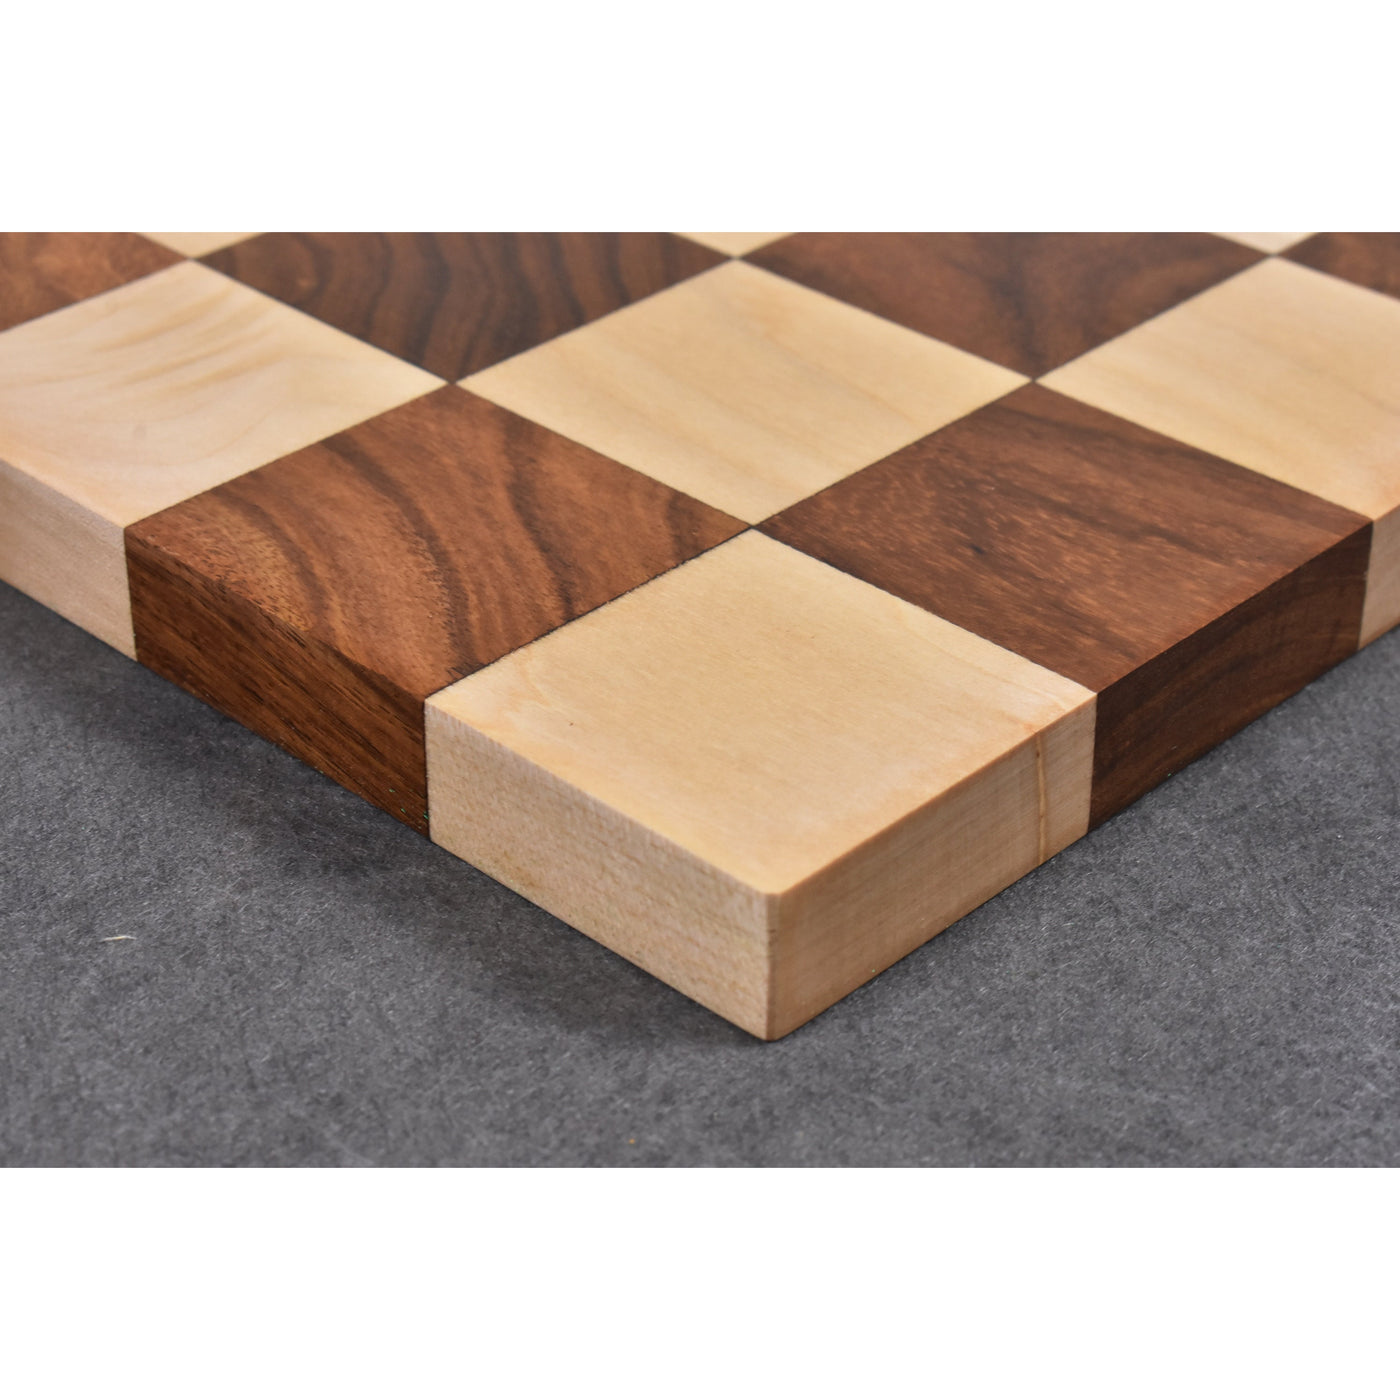 Borderless Hardwood End Grain Chess Board